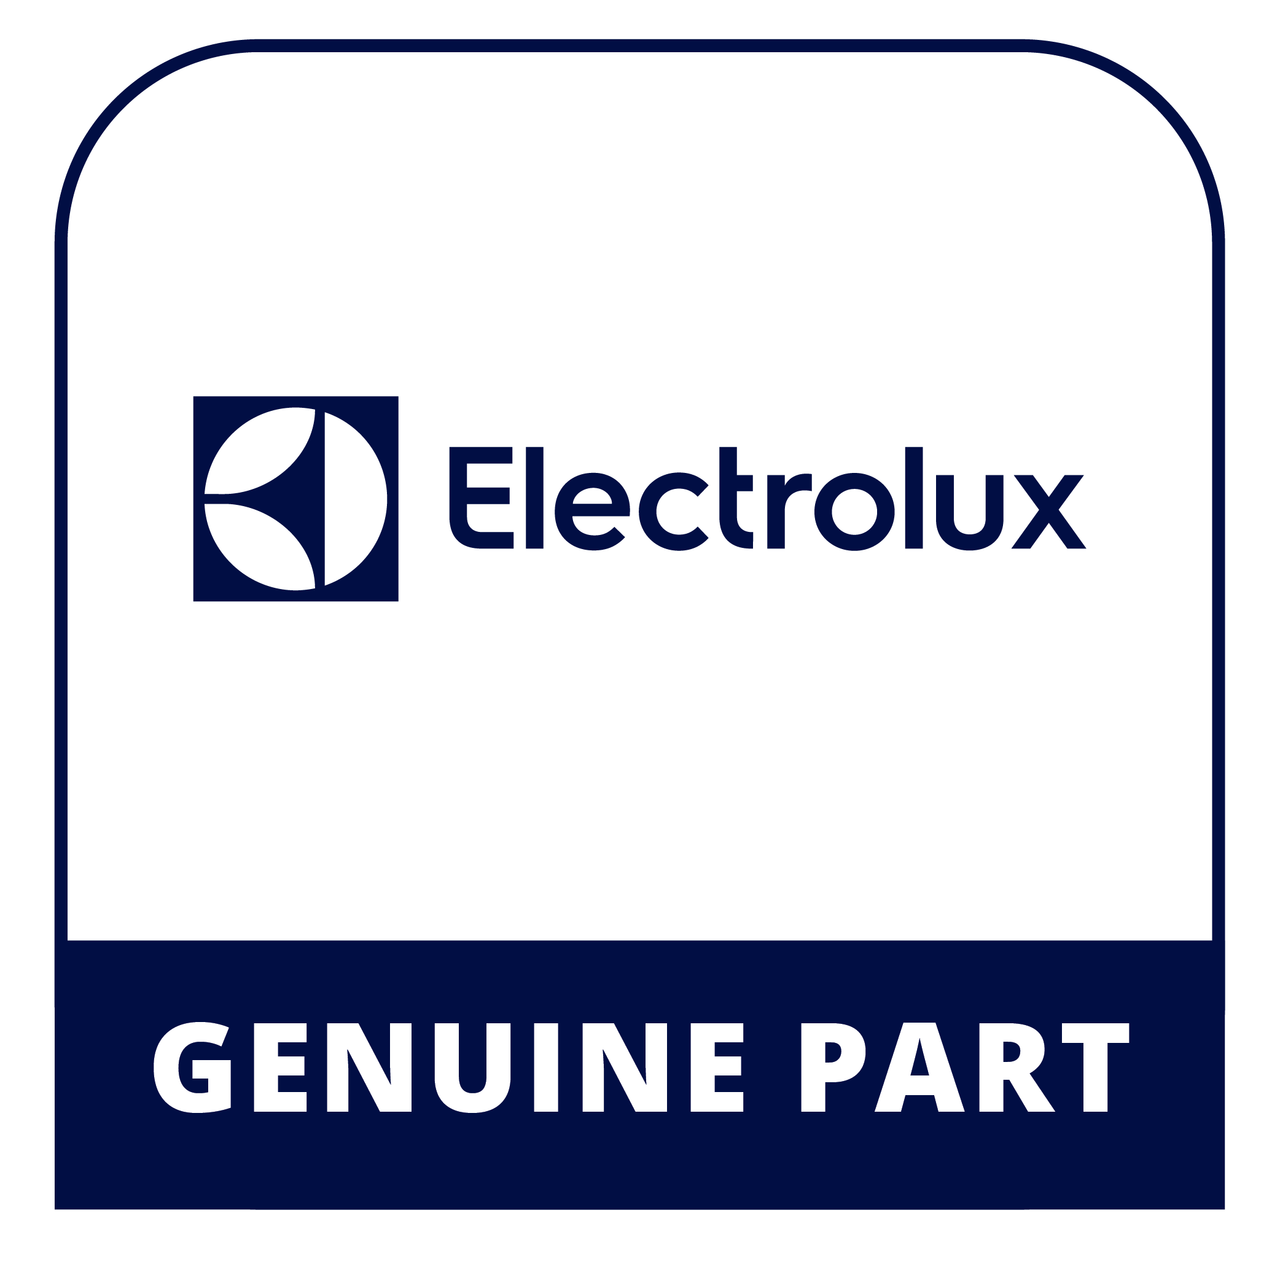 Frigidaire - Electrolux 5304519578 Cushion - Genuine Electrolux Part